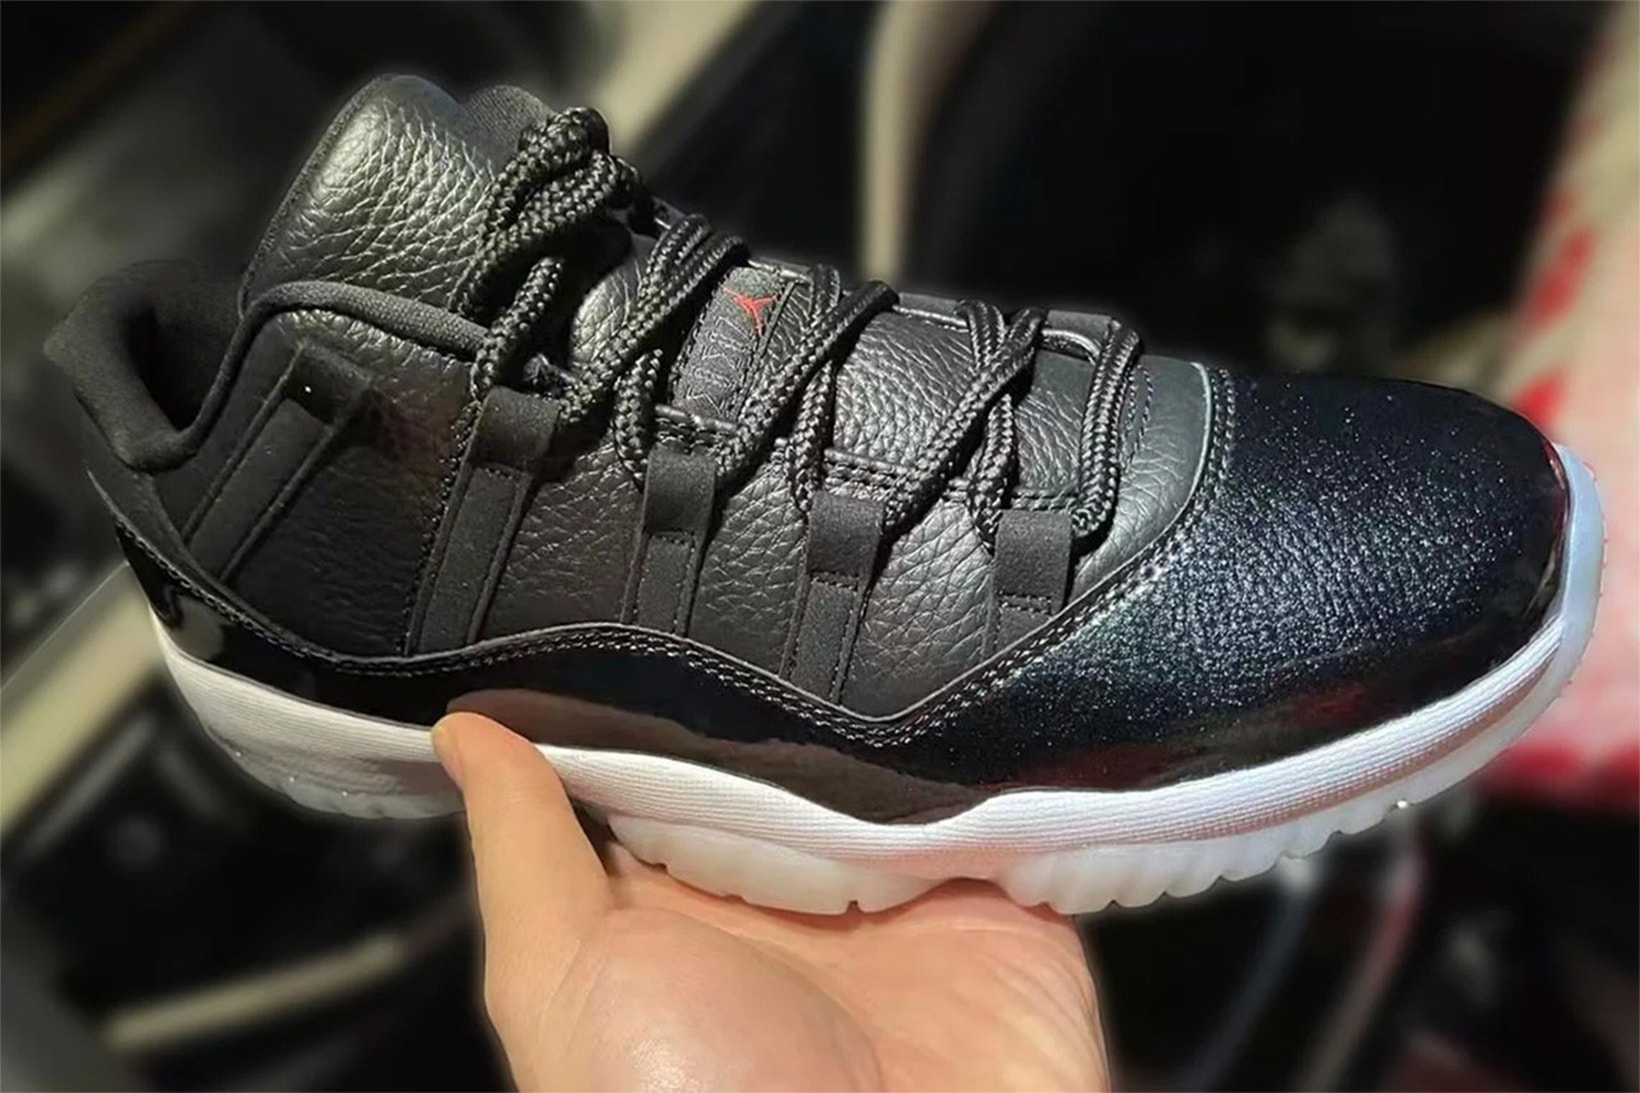 Nike Air Jordan 11 Low "72–10" Sneakers Black Gym Red Tumbled Leather Upper